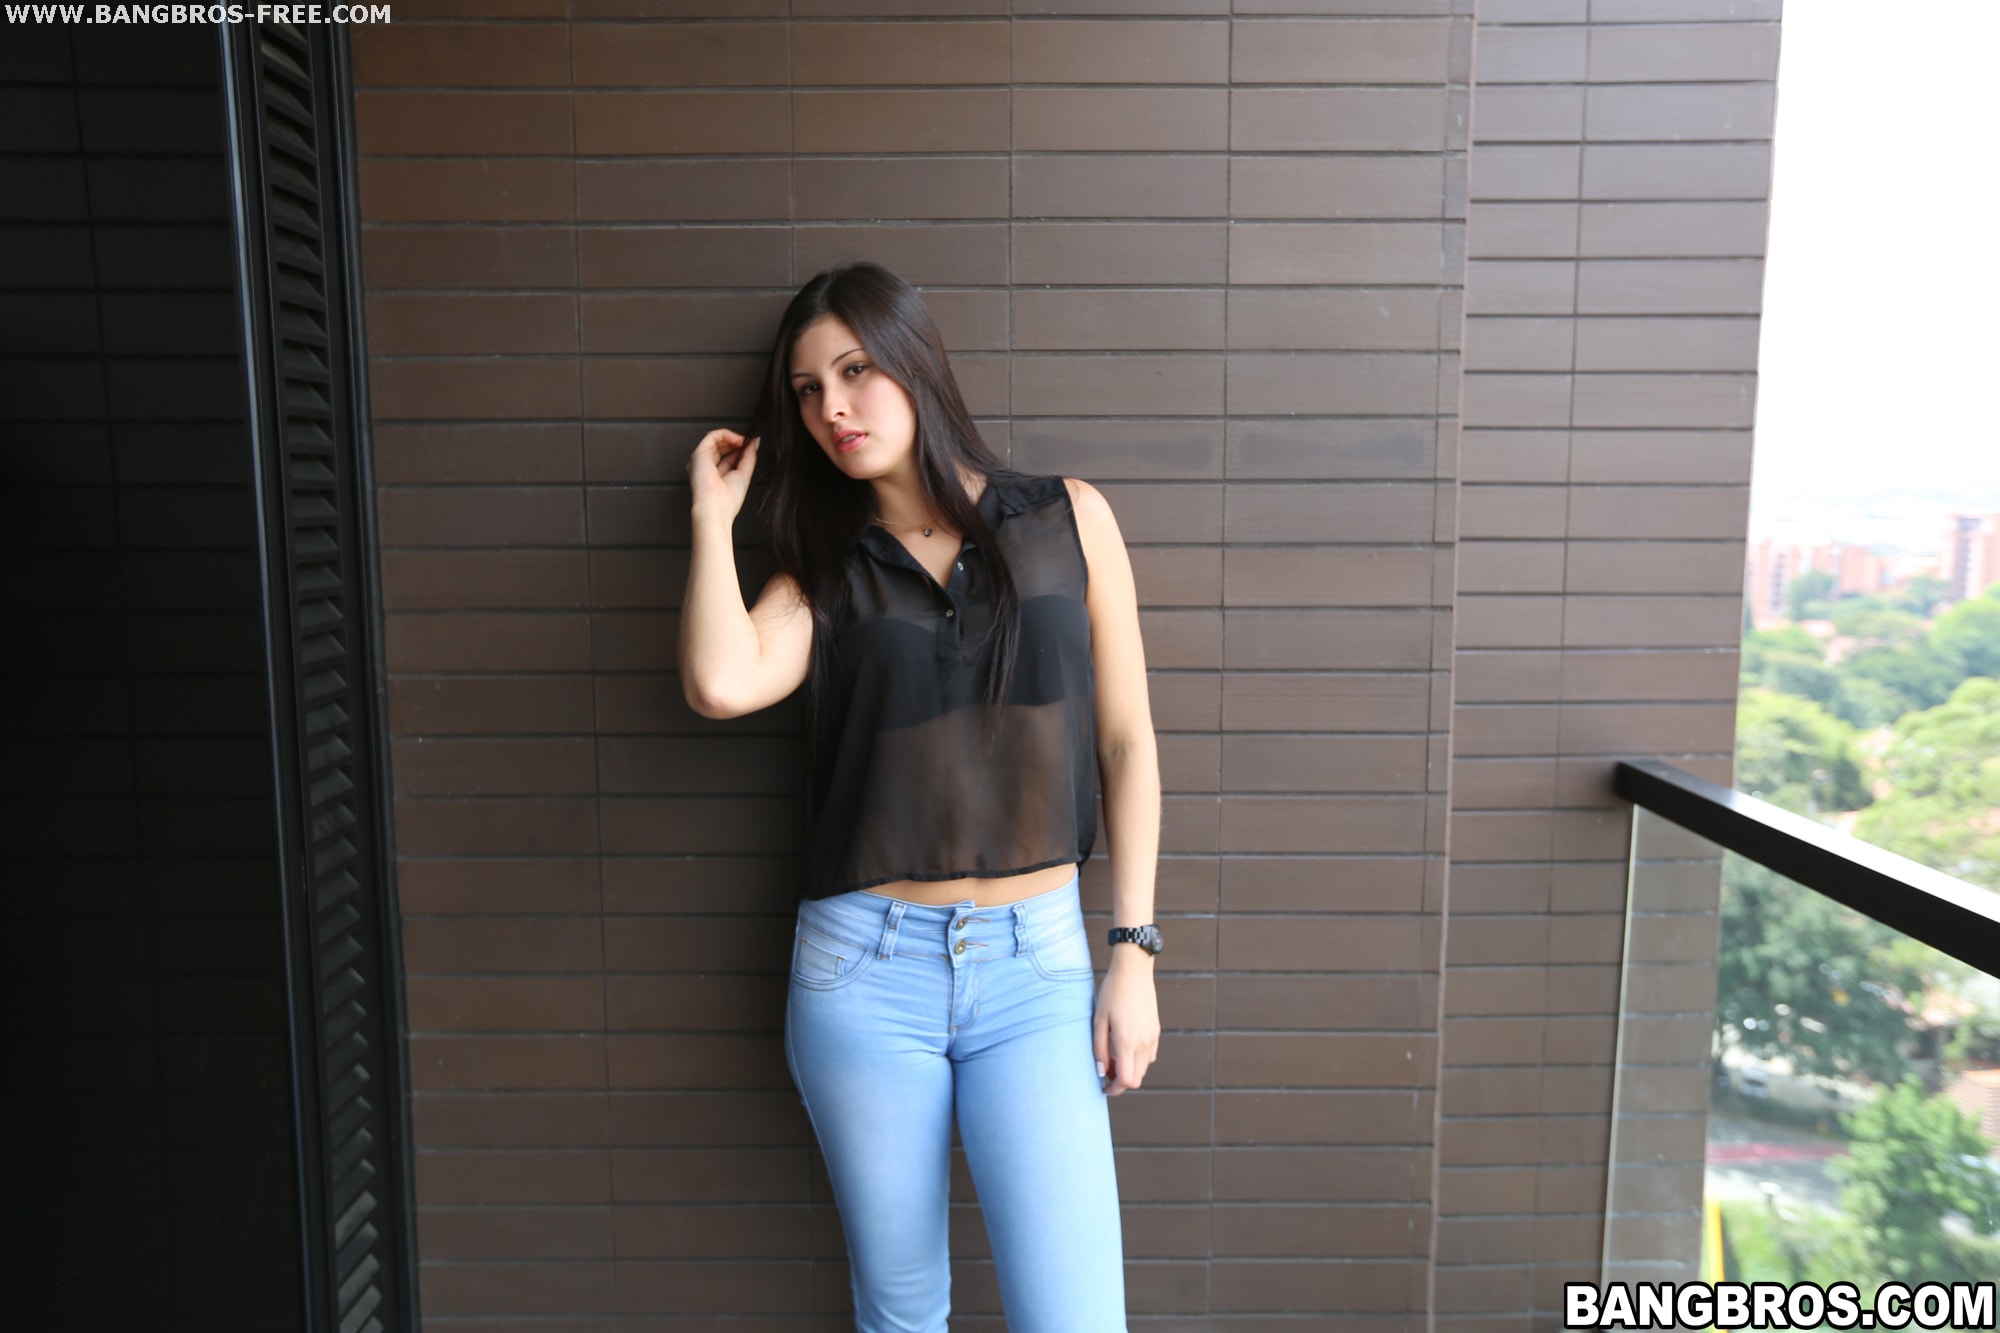 Bangbros 'Twenty Year Old Colombian Babe Gets Properly Fucked' starring Samanta Lopez (Photo 4)